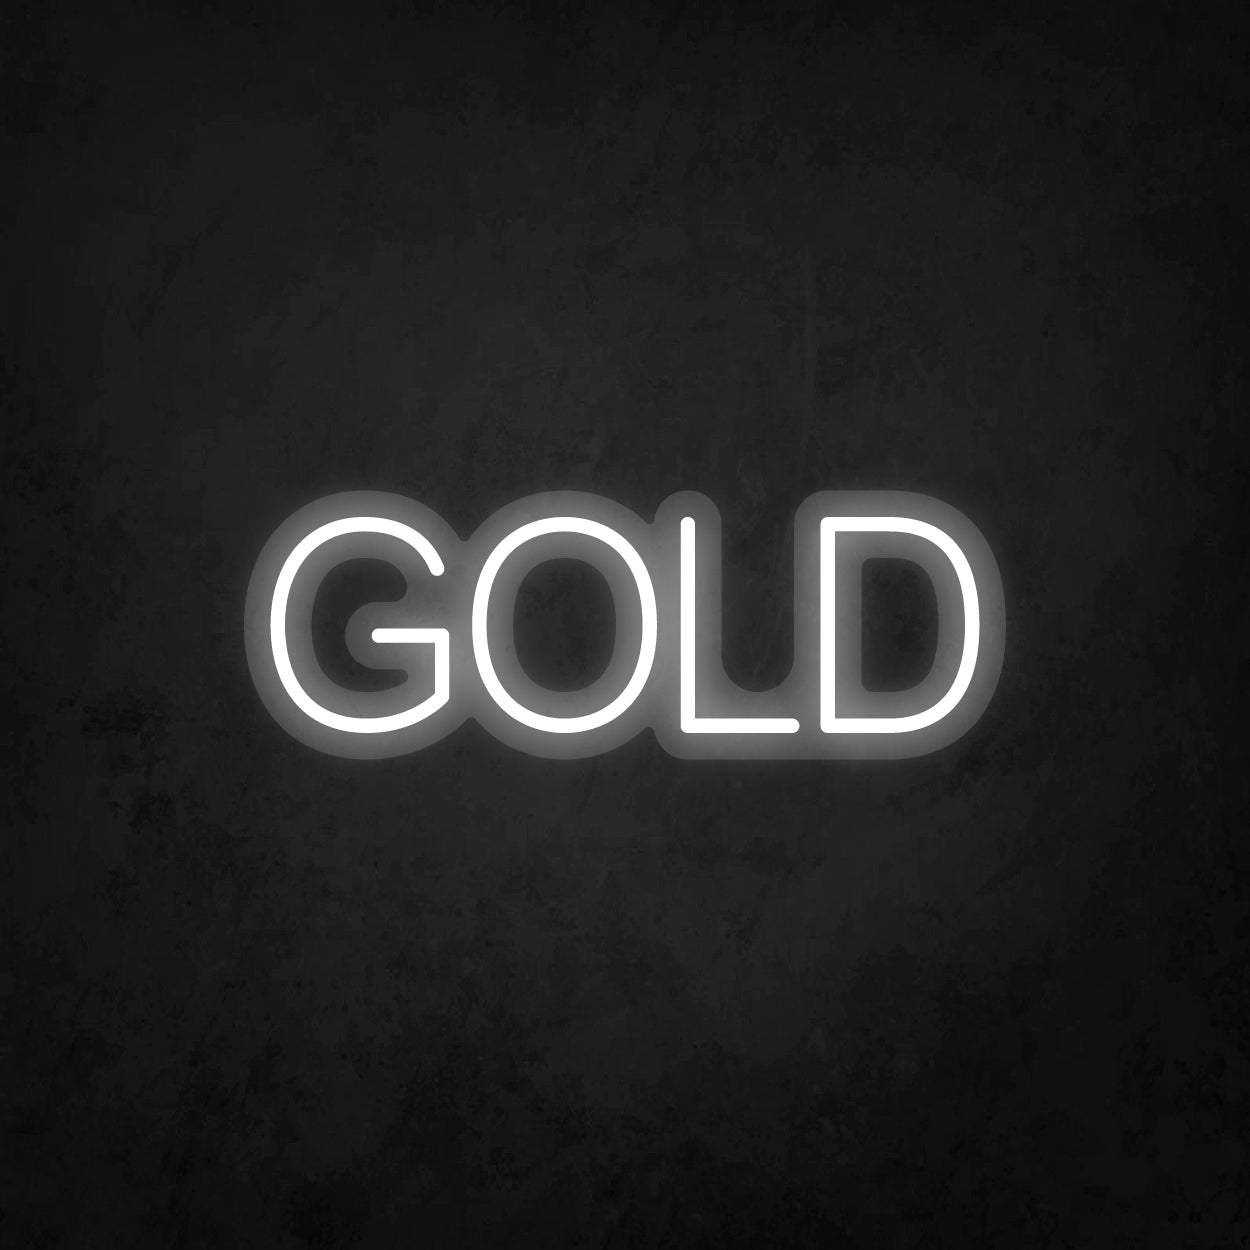 LED Neon Sign - GOLD - 1 Line